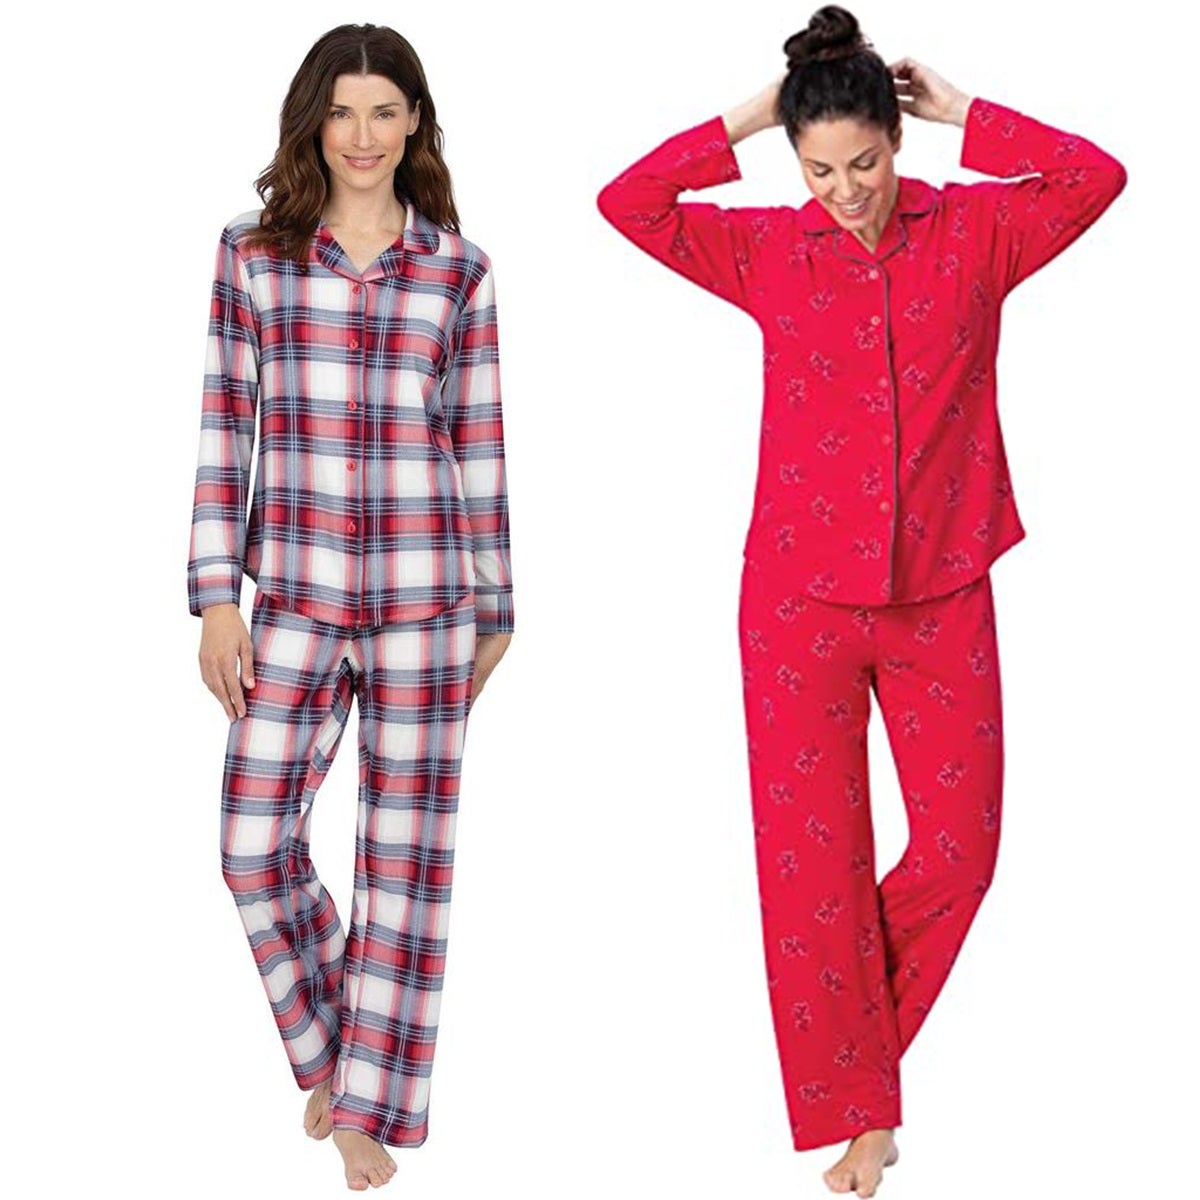 Jo & Bette Women’s Chenille Pajamas, PJ Lounge Shirt and Pants Set